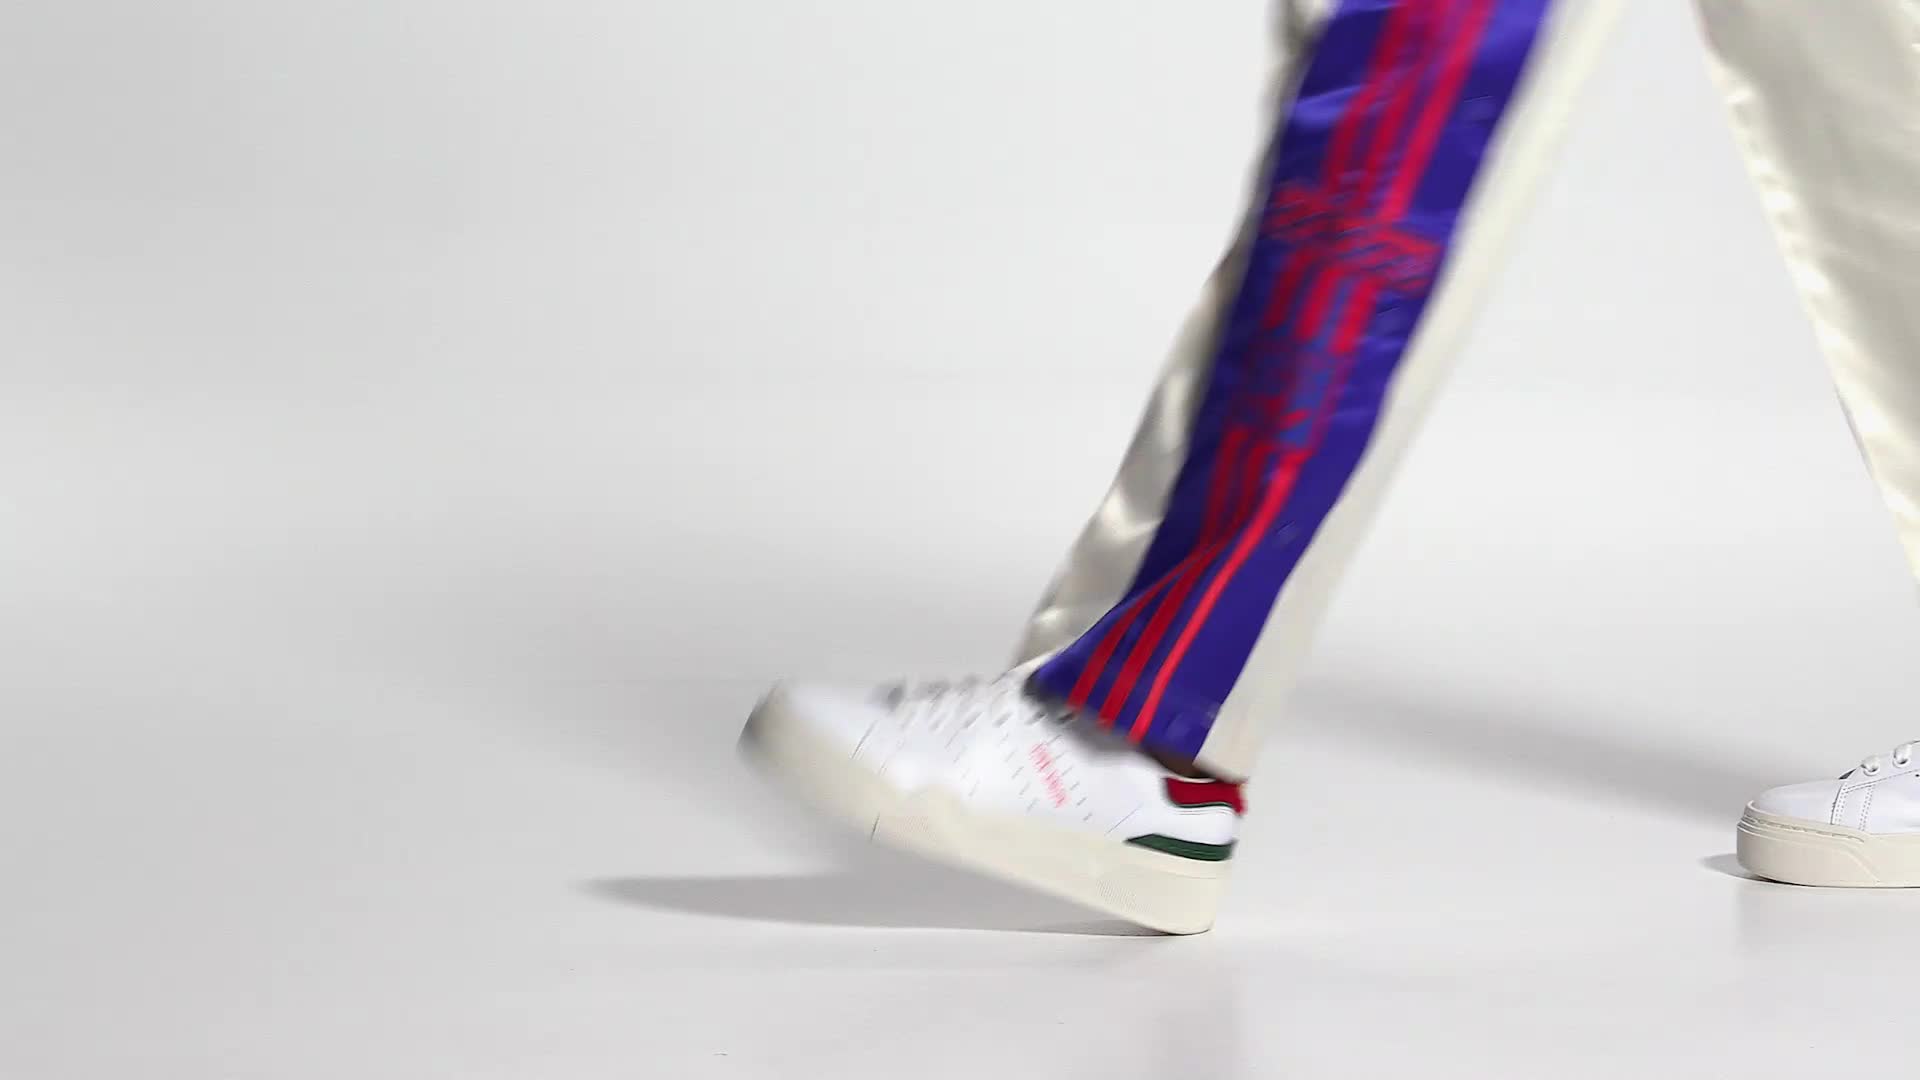 adidas Originals Stan Smith Bonega 2B platform sneakers in white and red